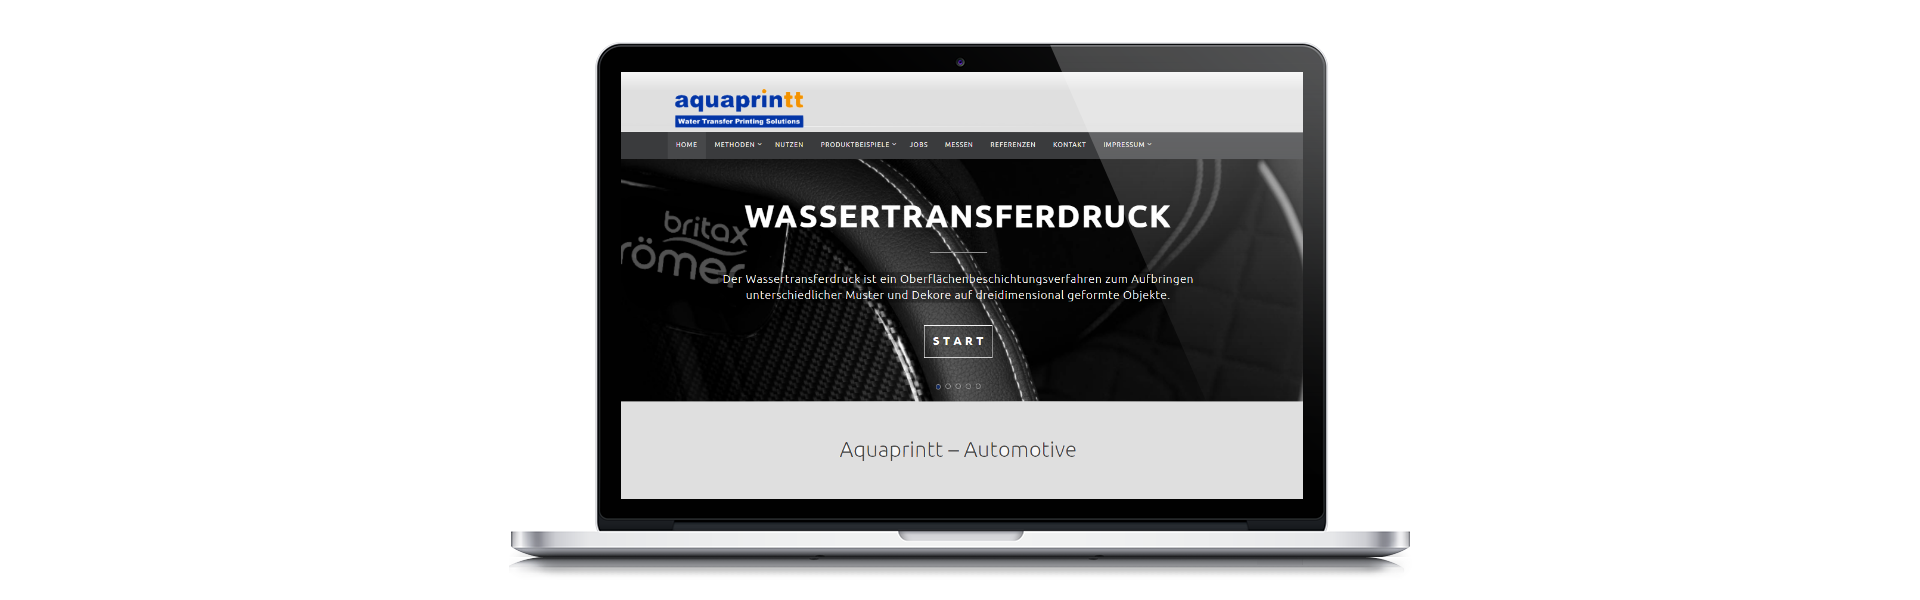 www.aquaprintt.de